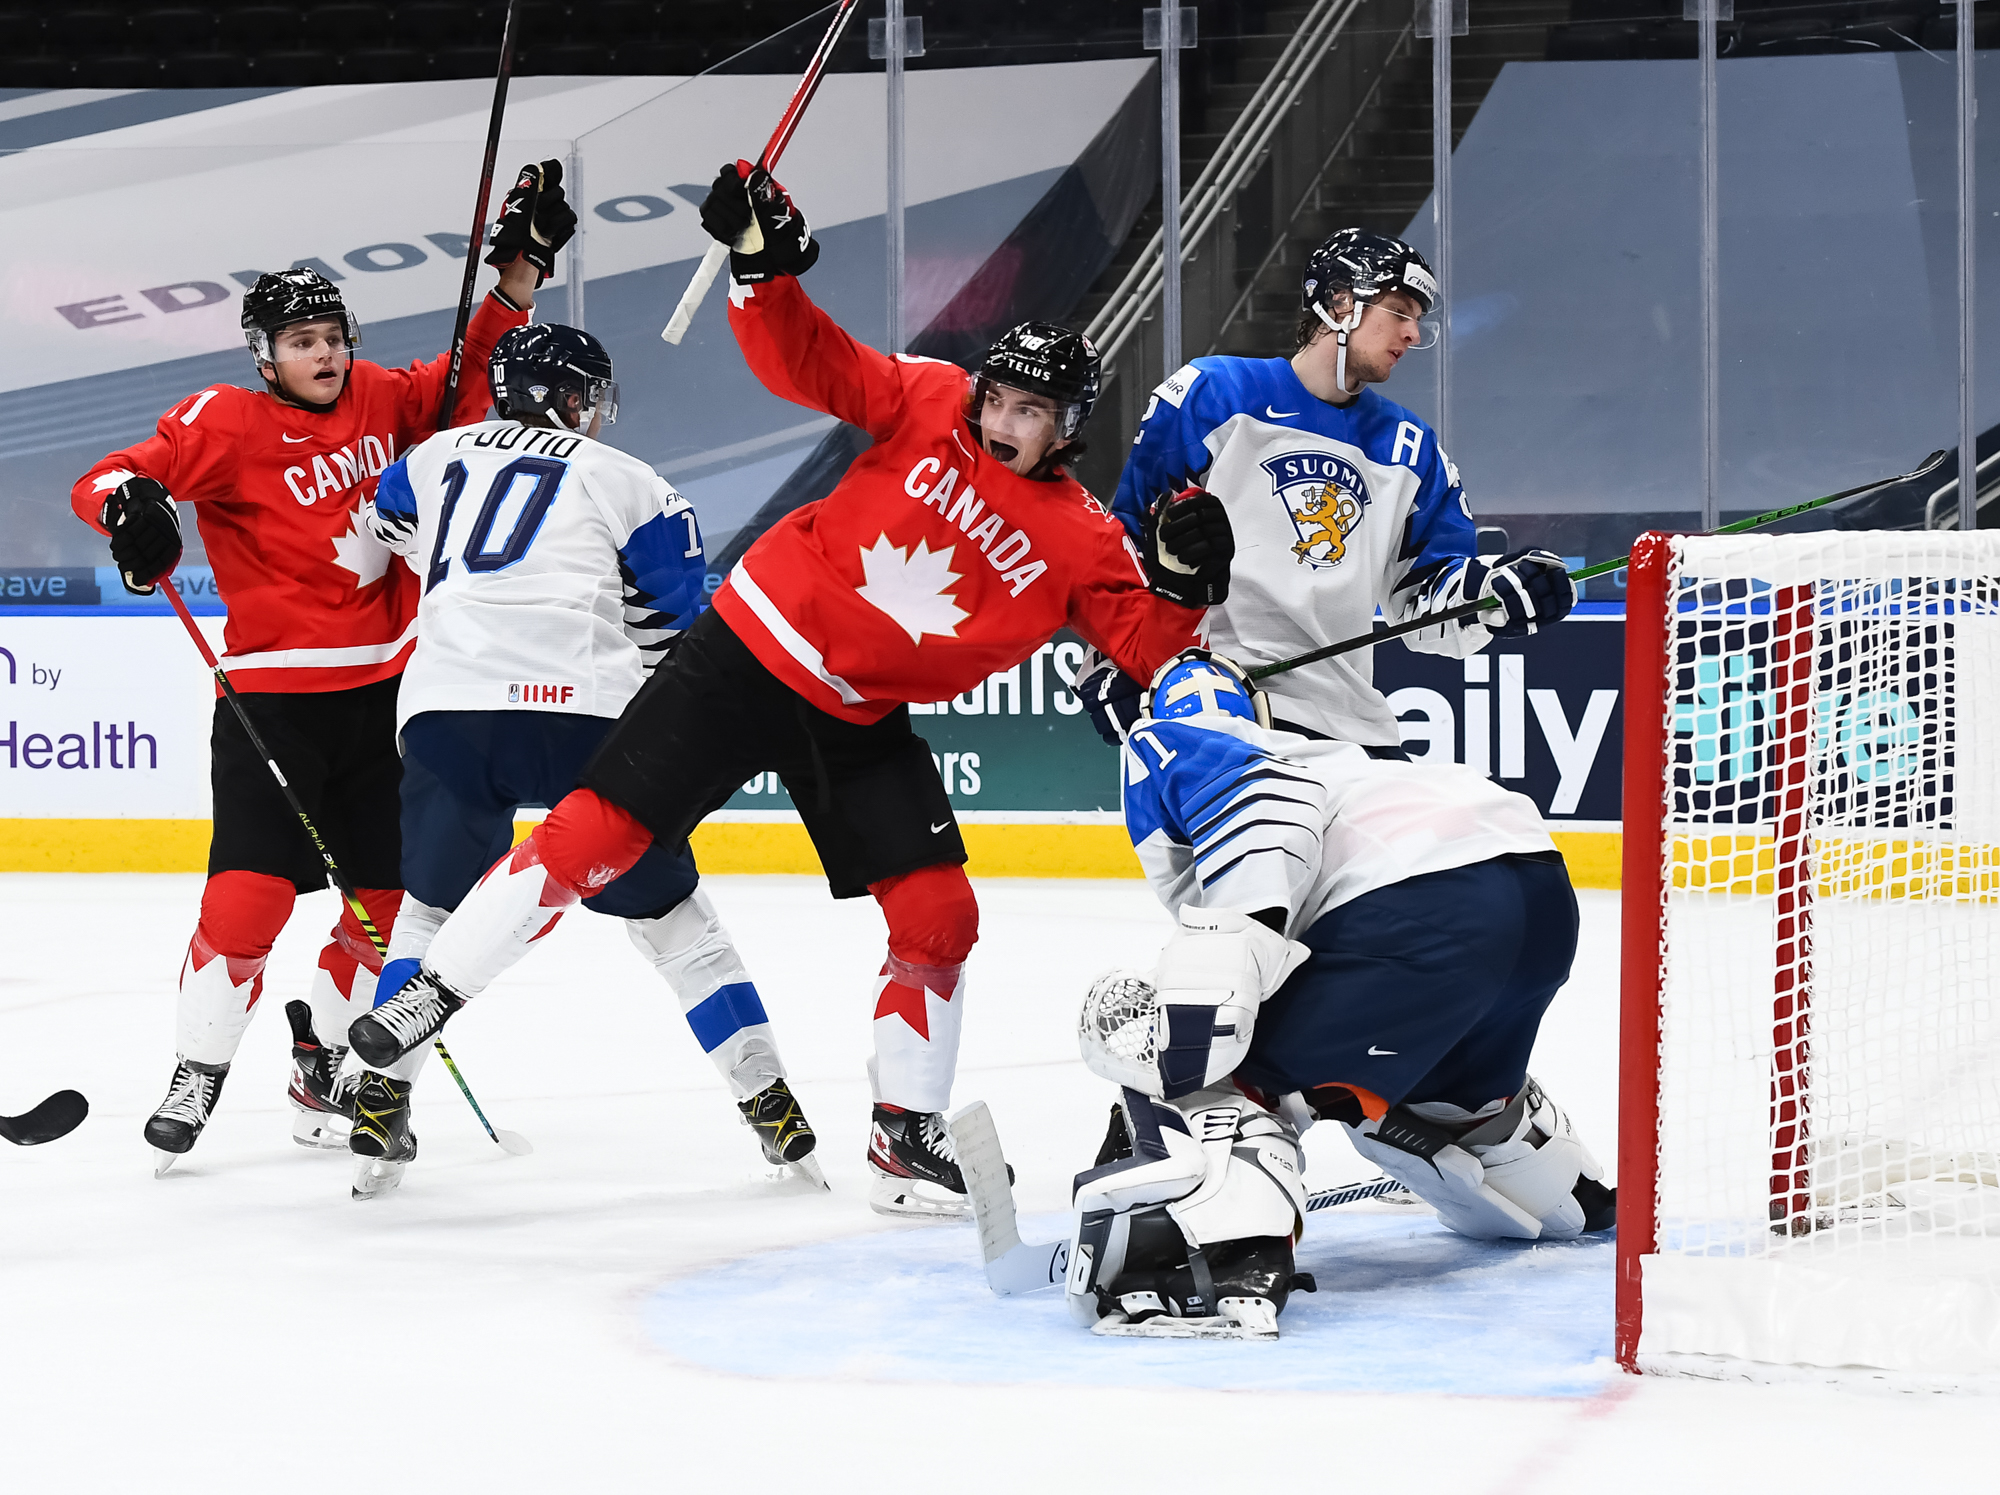 IIHF - Gallery: Canada vs Finland - 2021 IIHF World Junior Championship